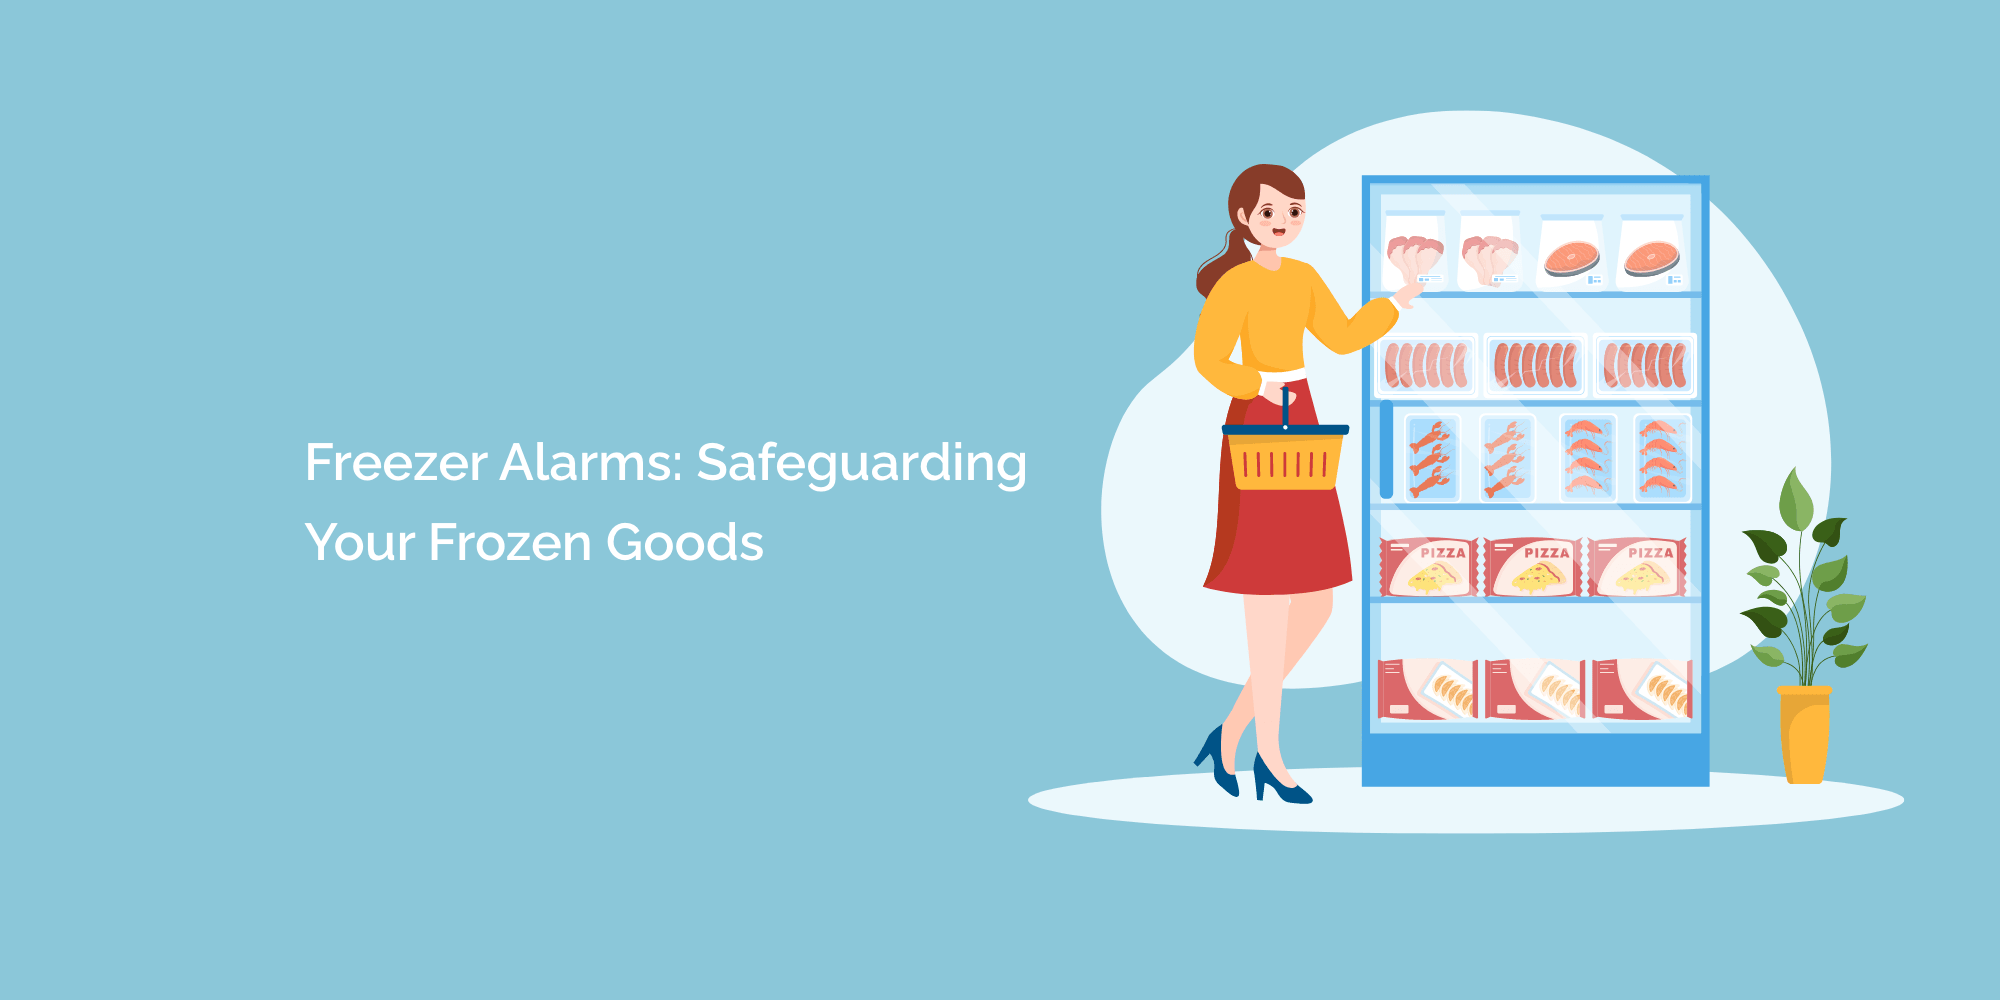 Freezer Alarms: Safeguarding Your Frozen Goods